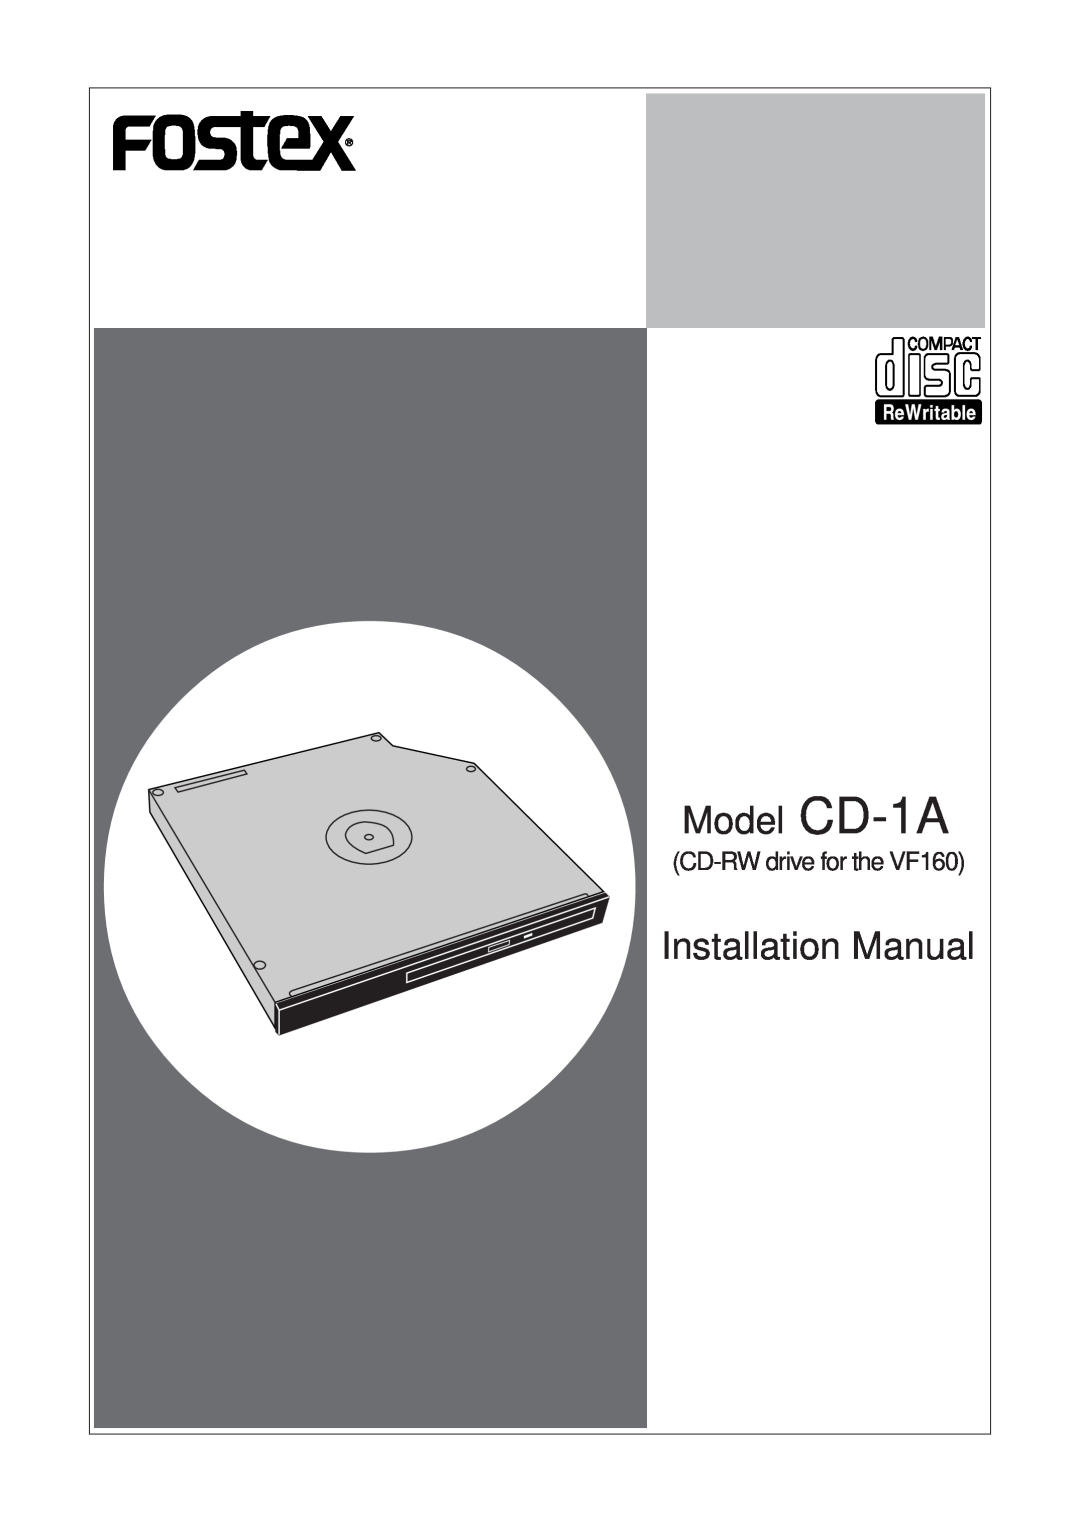 Fostex installation manual Model CD-1A, Installation Manual, CD-RW drive for the VF160 